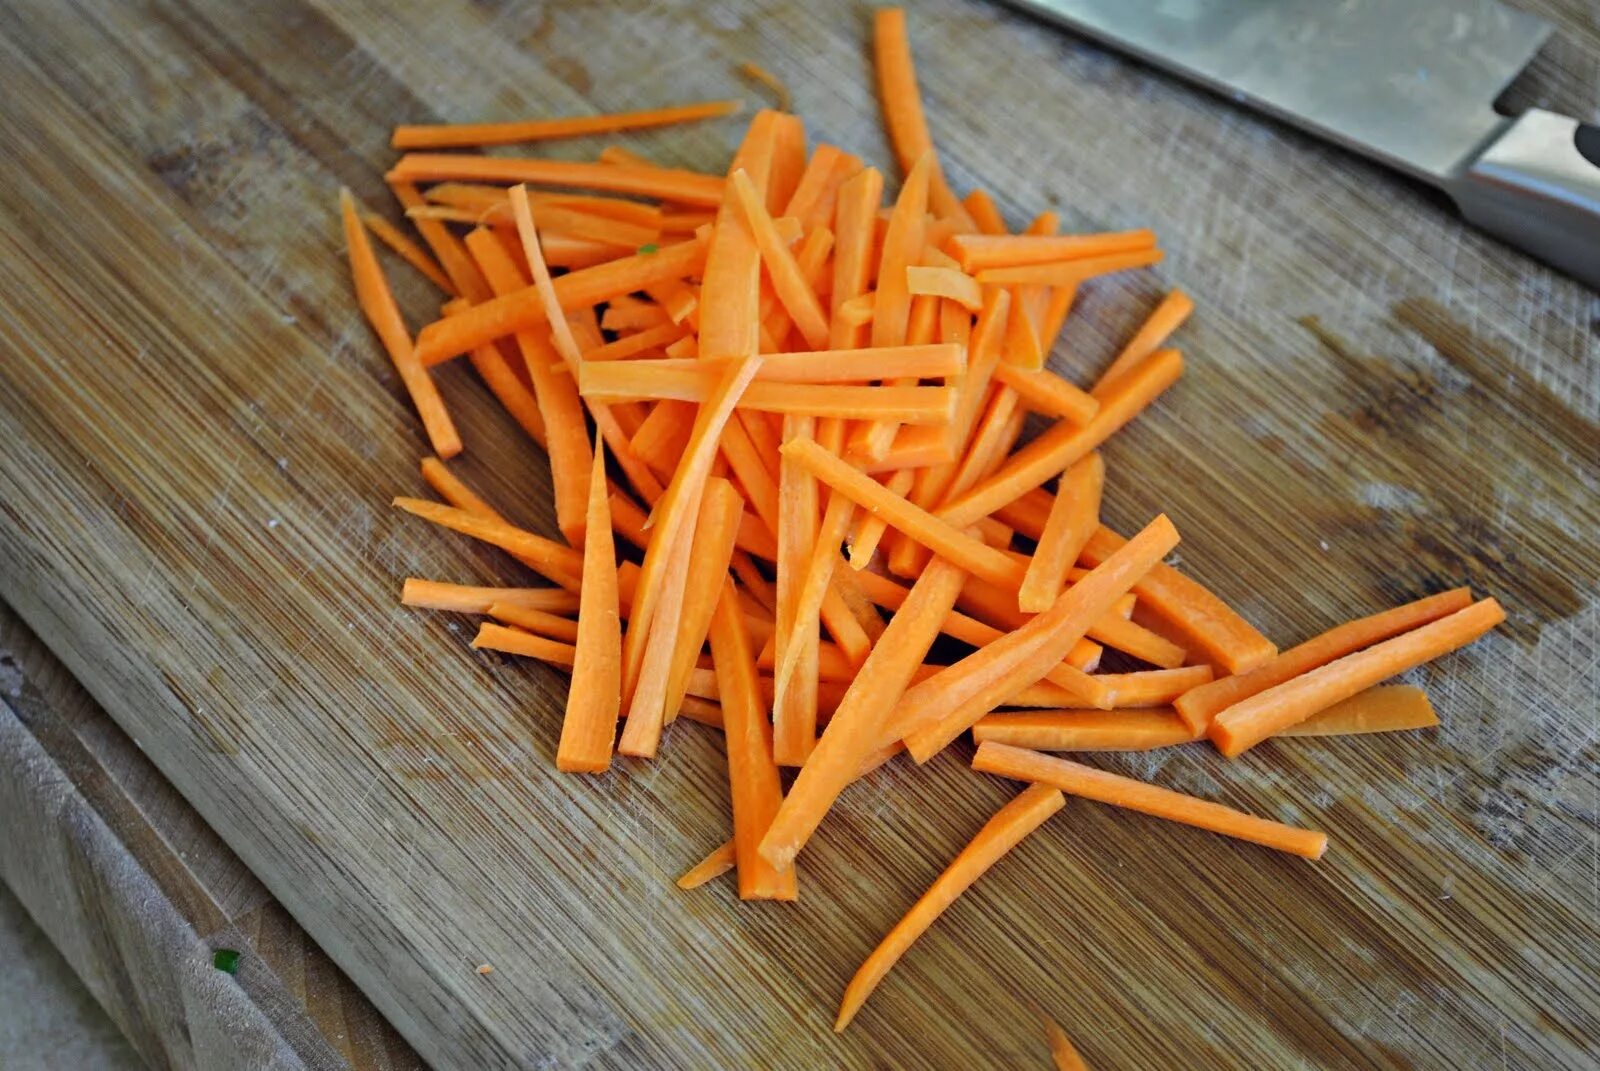 Нарезка овощей соломкой. Нарезка моркови соломкой. Порезать морковь соломкой. Морковь нарезанная тонкой соломкой. Морковка порезанная соломкой.